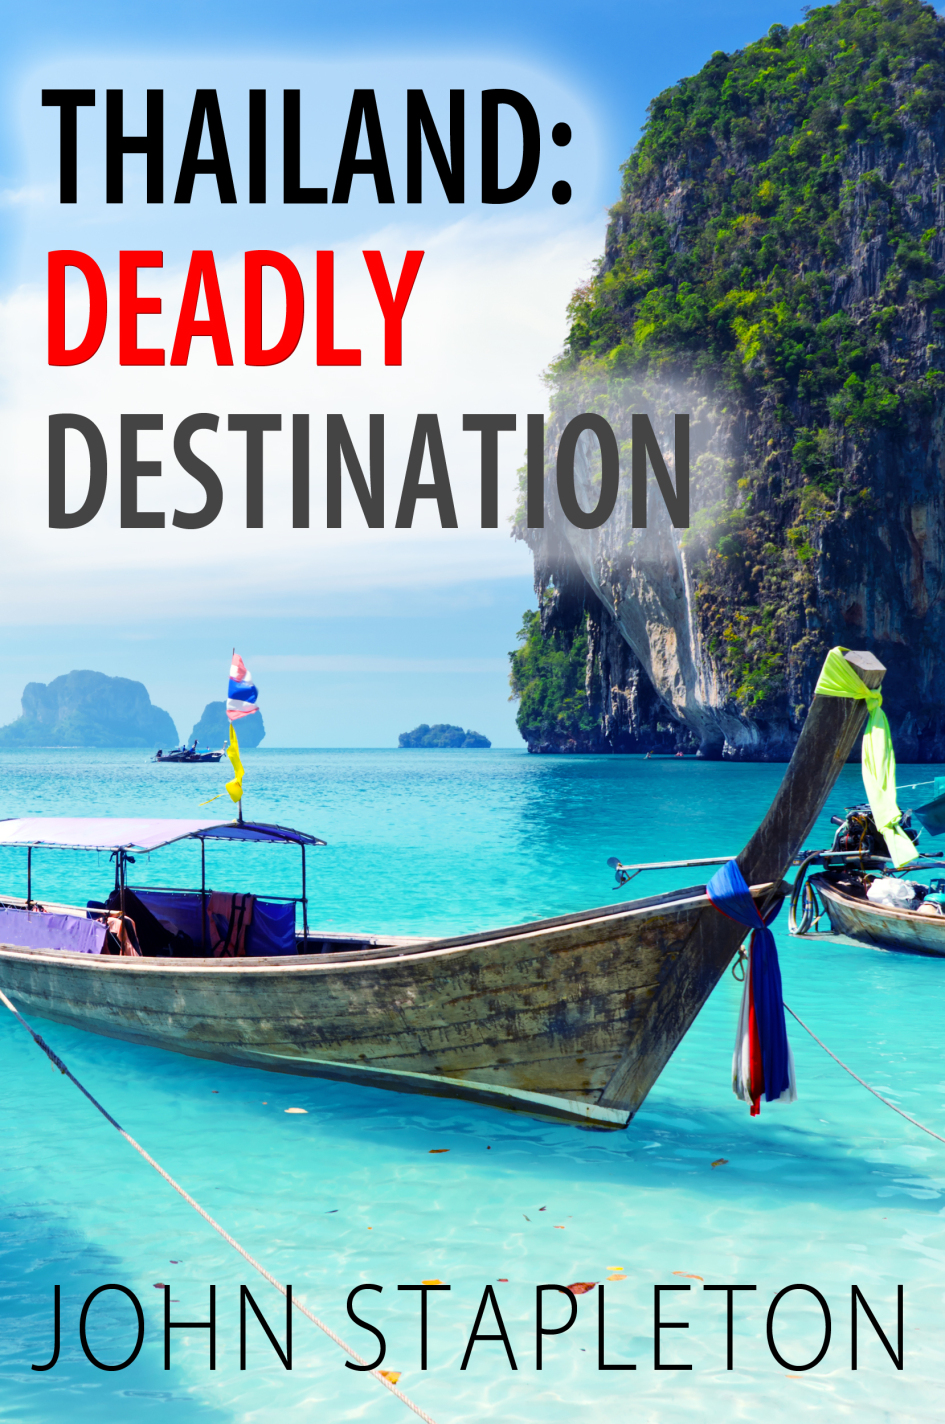 Thailand Deadly Destination by John Stapleton